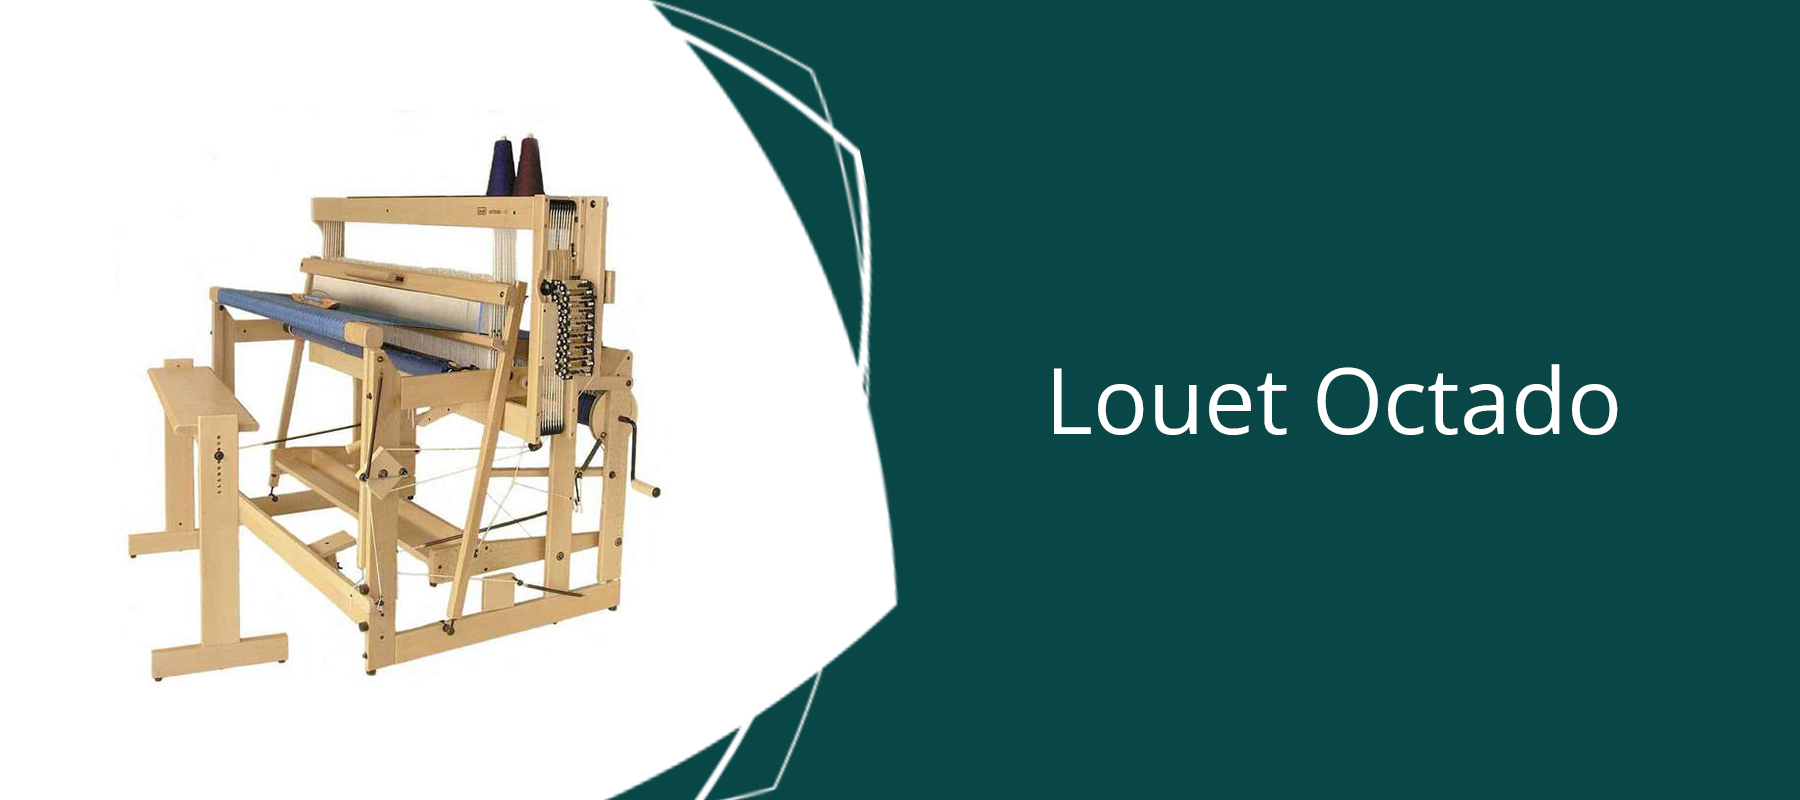 Louet Octado Dobby - 8 Shaft Computer or Mechanical Dobby Loom